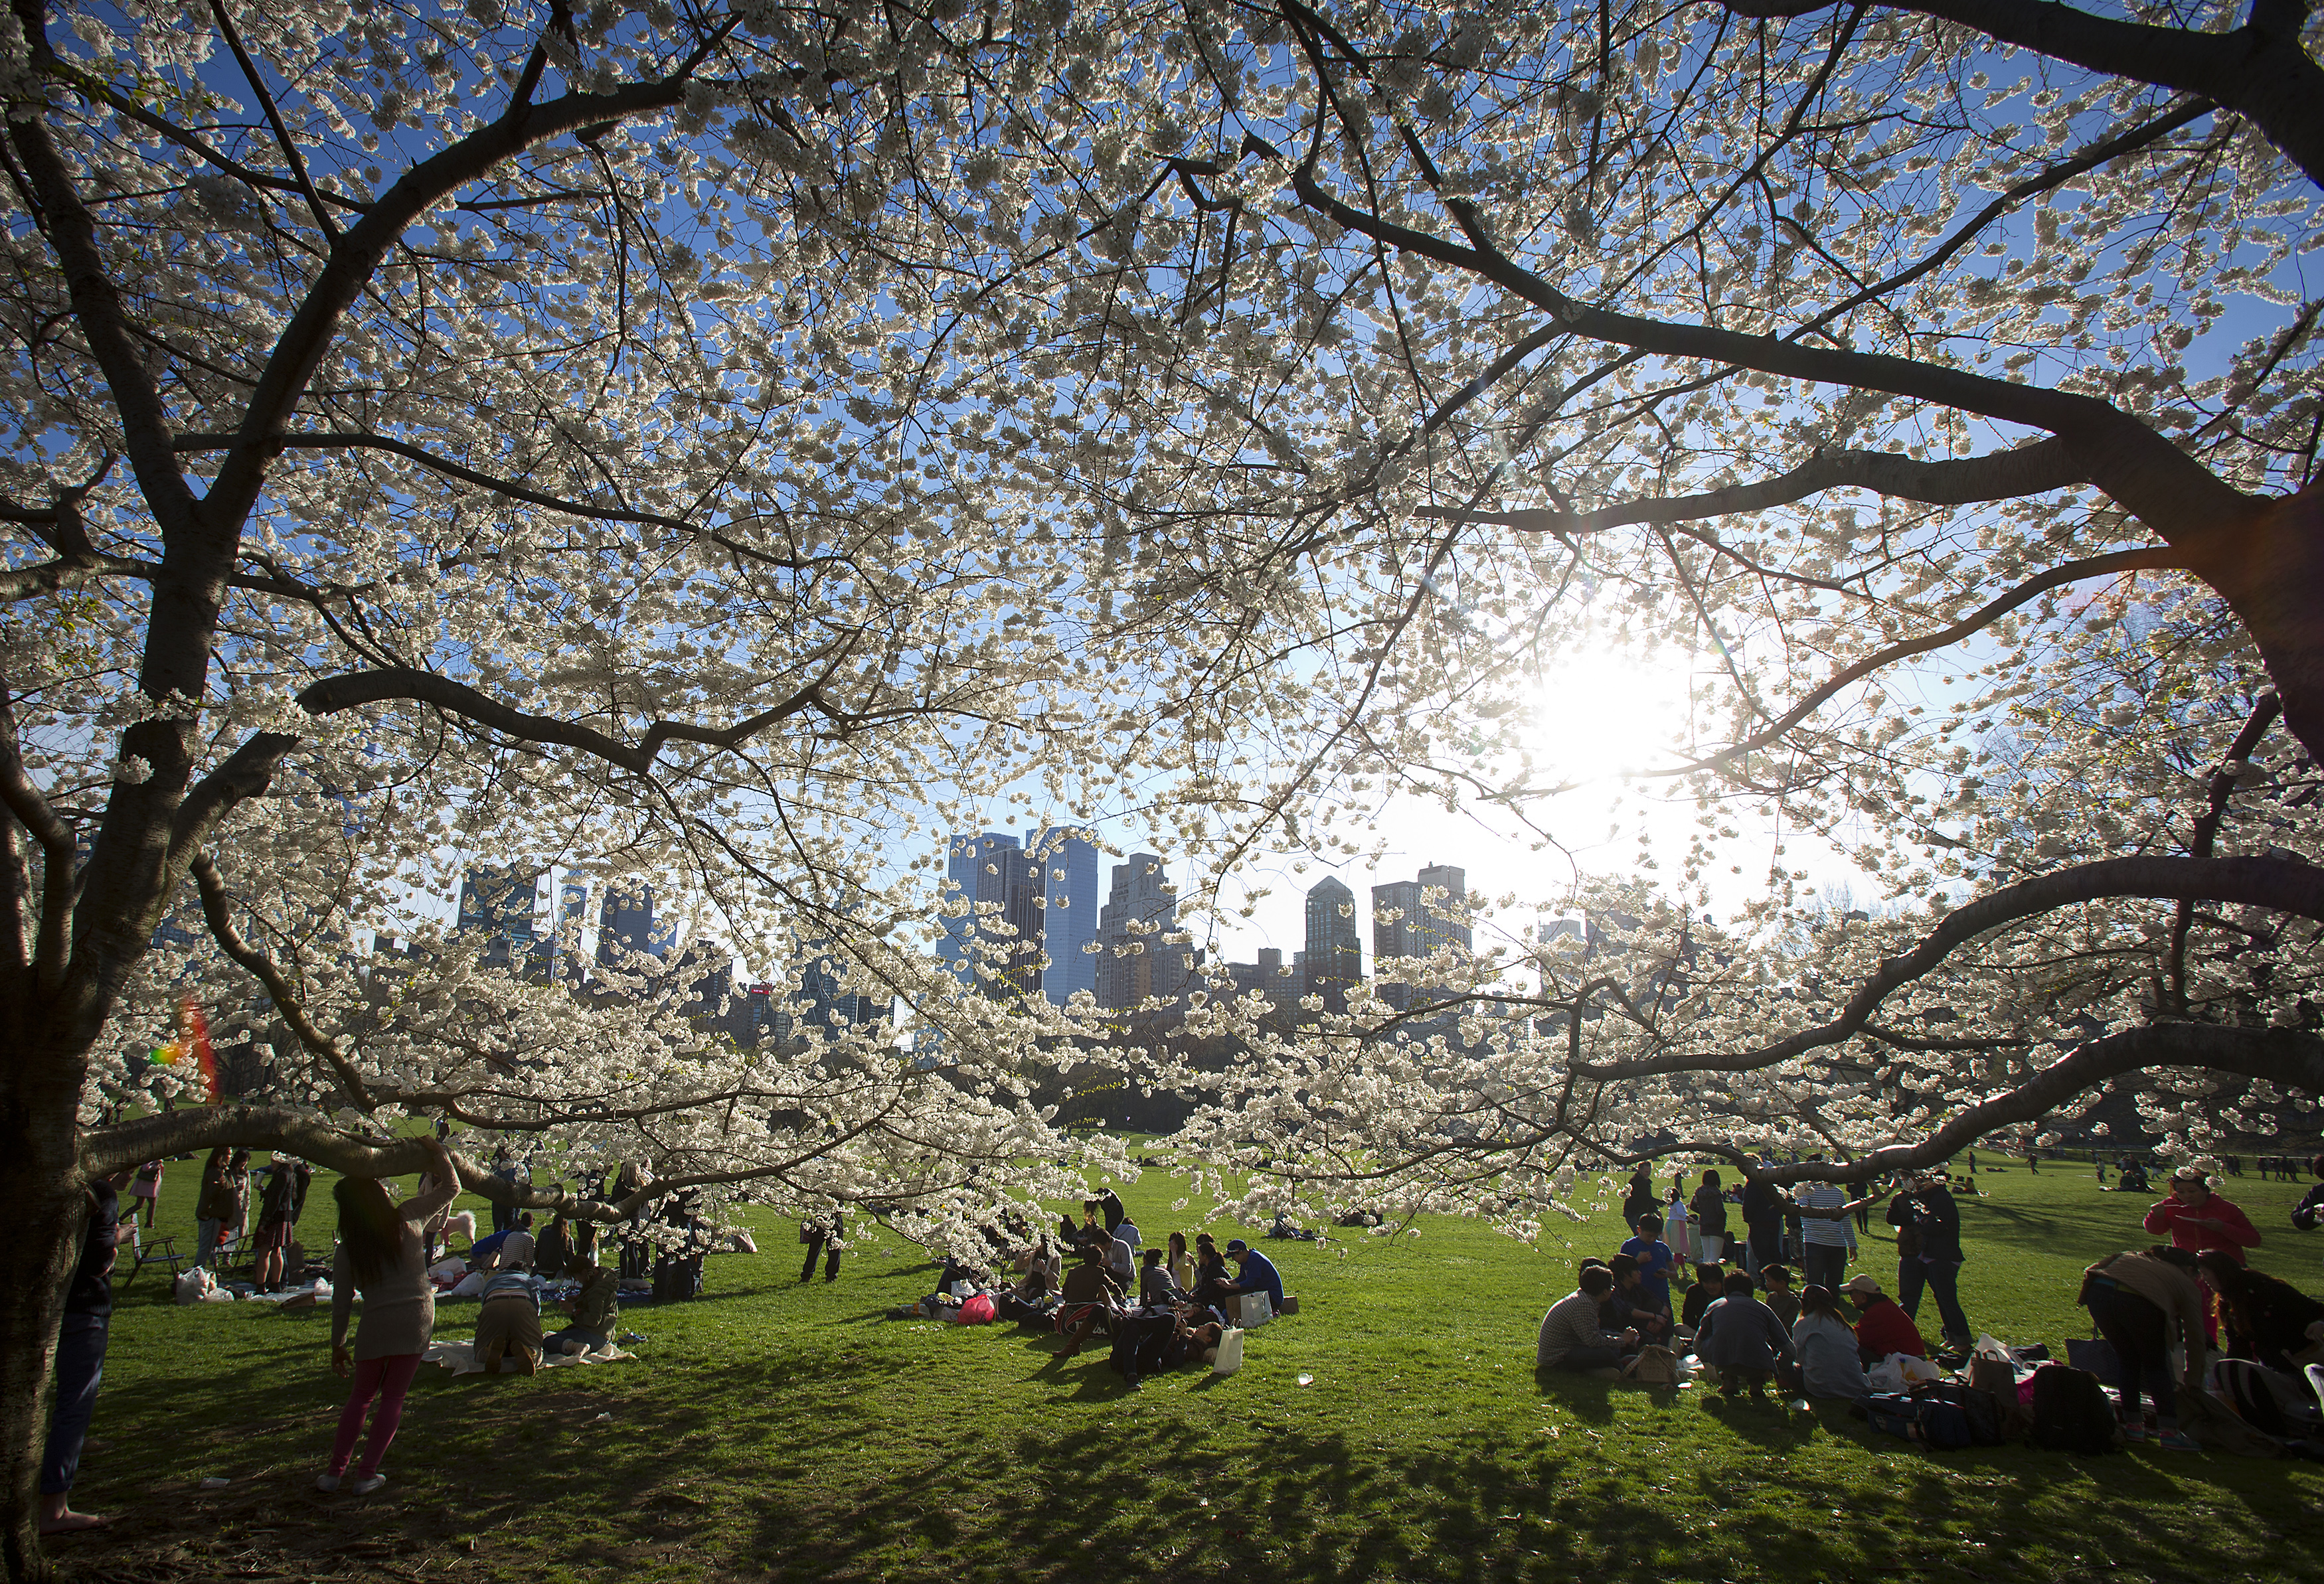 Central park 22. Сакура в Центральном парке Нью Йорка. Центральный парк Нью-Йорк весной. Цветение вишни в Центральном парке Нью Йорк. Цветение вишни в Нью Йорке.